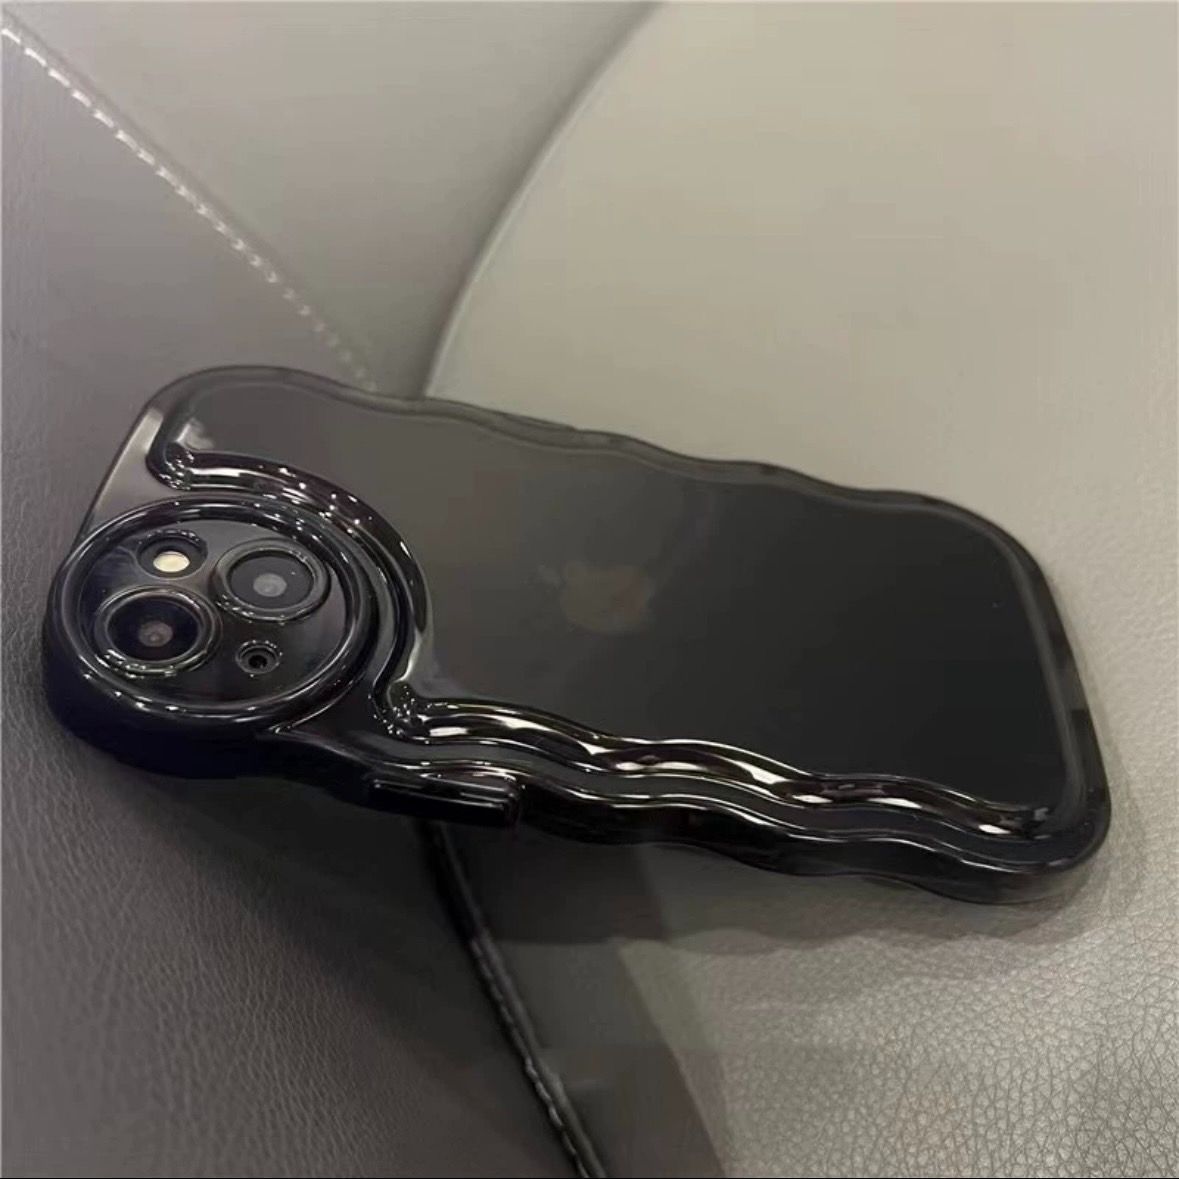 iPhone14promax ケース アイフォン14promax あいふぉん14promax 14promax アイフォン14promaxケース 写真入れ 背面収納 透明 クリア クリアケース 透明ケース アイフォン 耐衝撃 あいふぉん14promaxケース